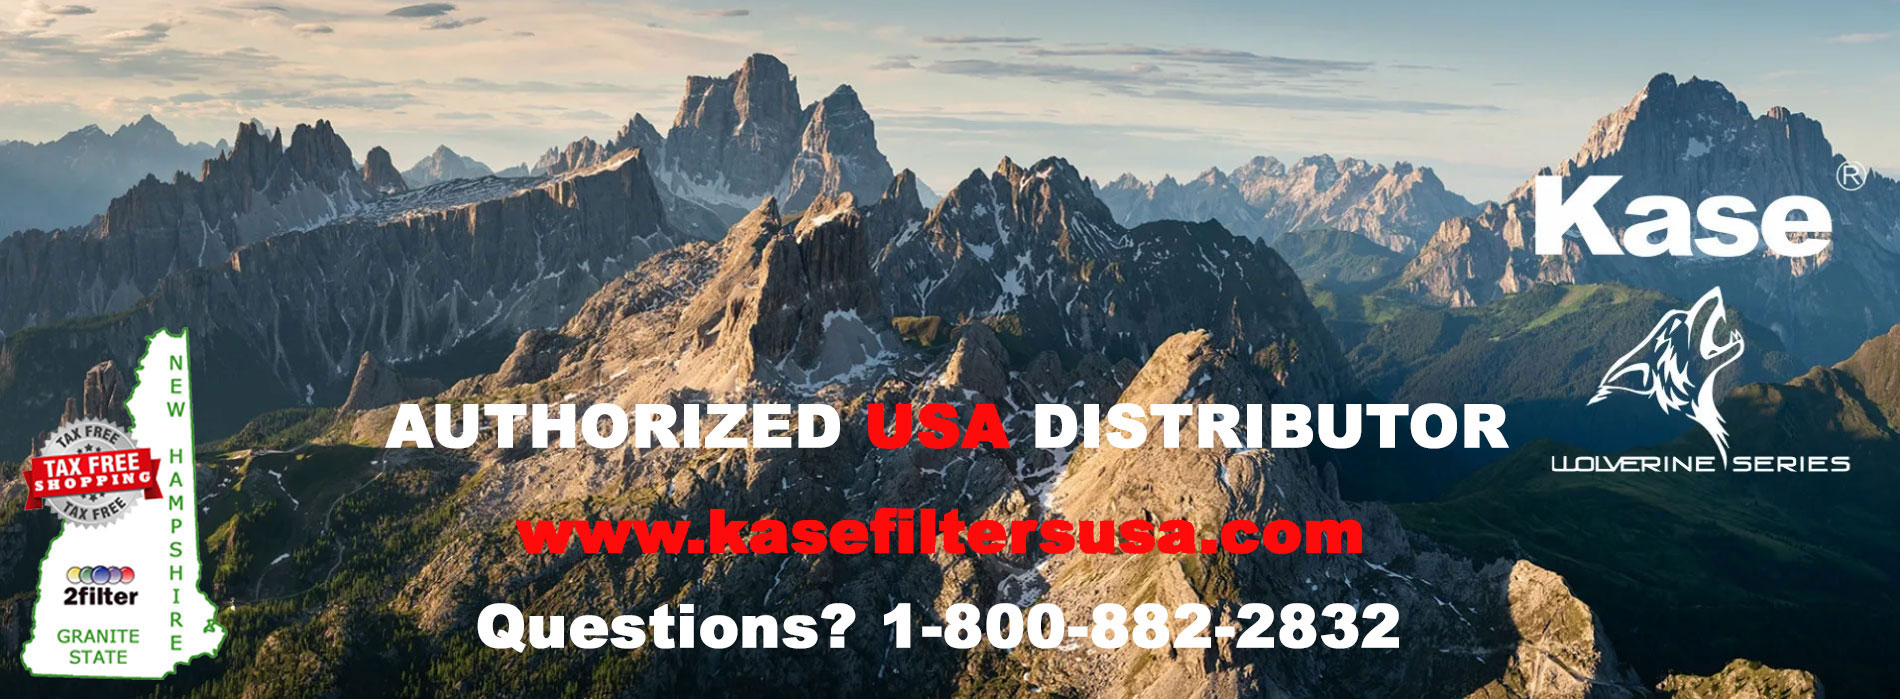 Kase-mountains-tax-free2